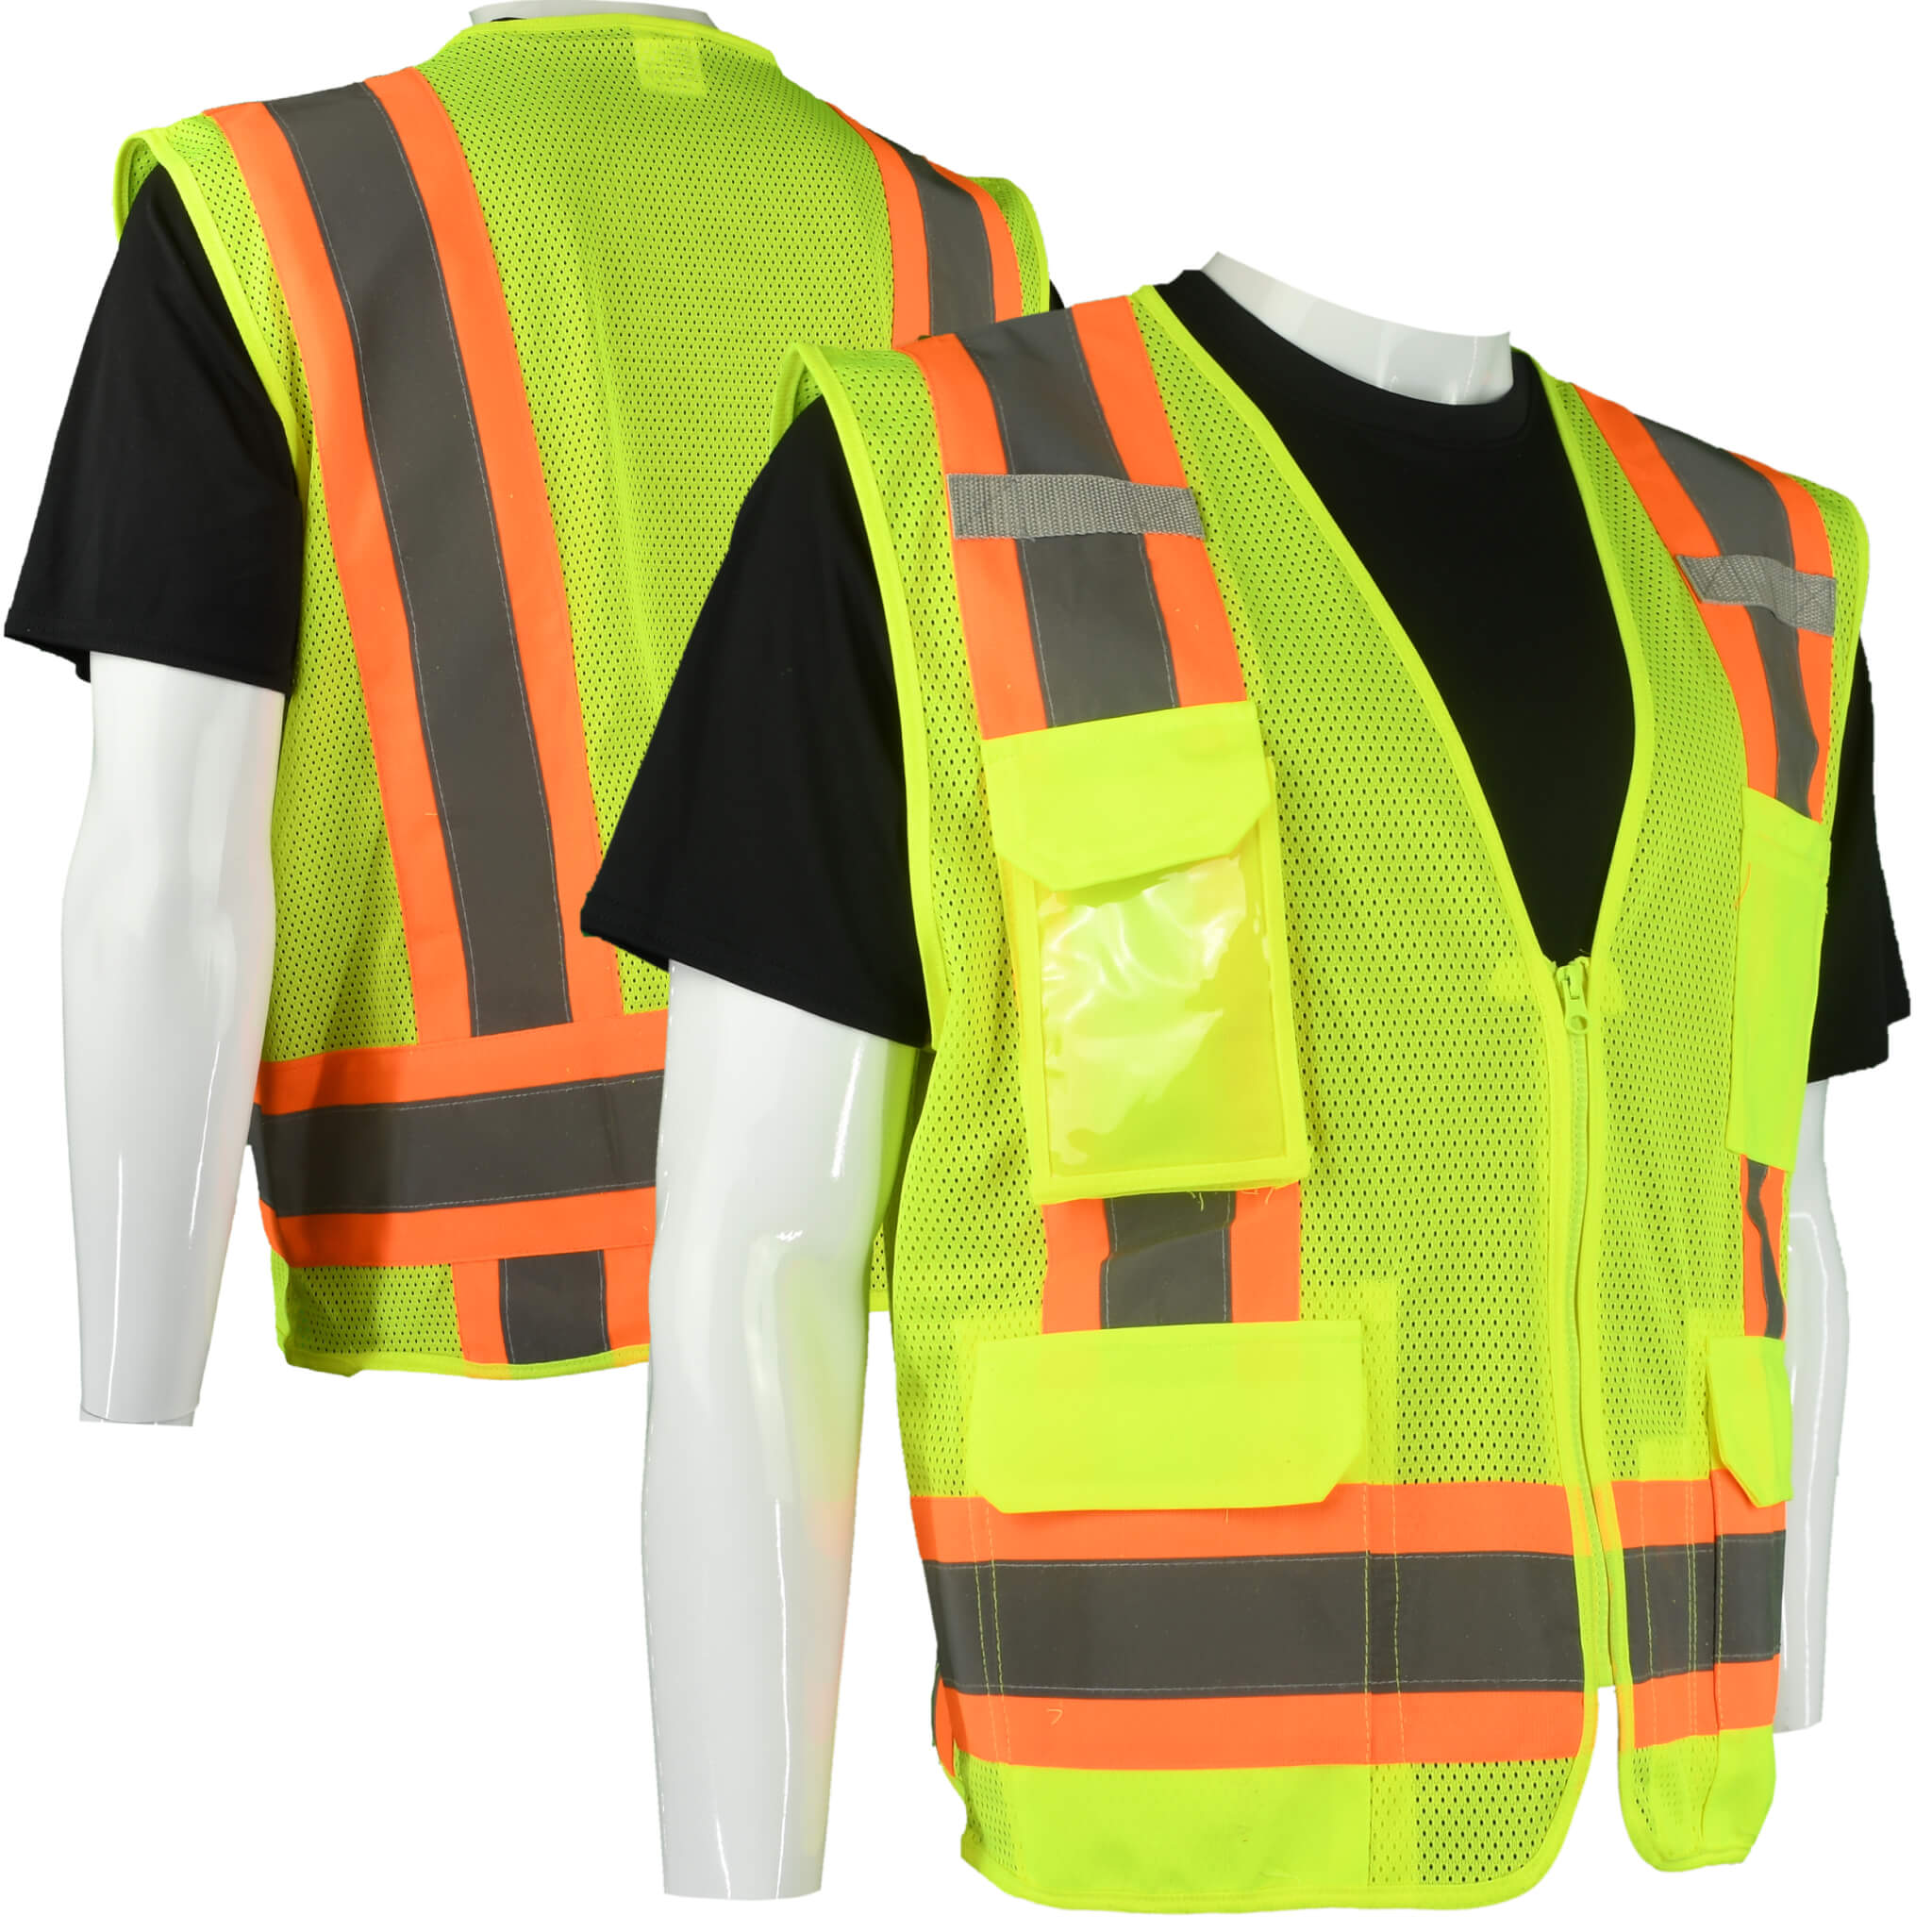 Class 2 Type R Hi-Vis Yellow Mesh Safety Vest